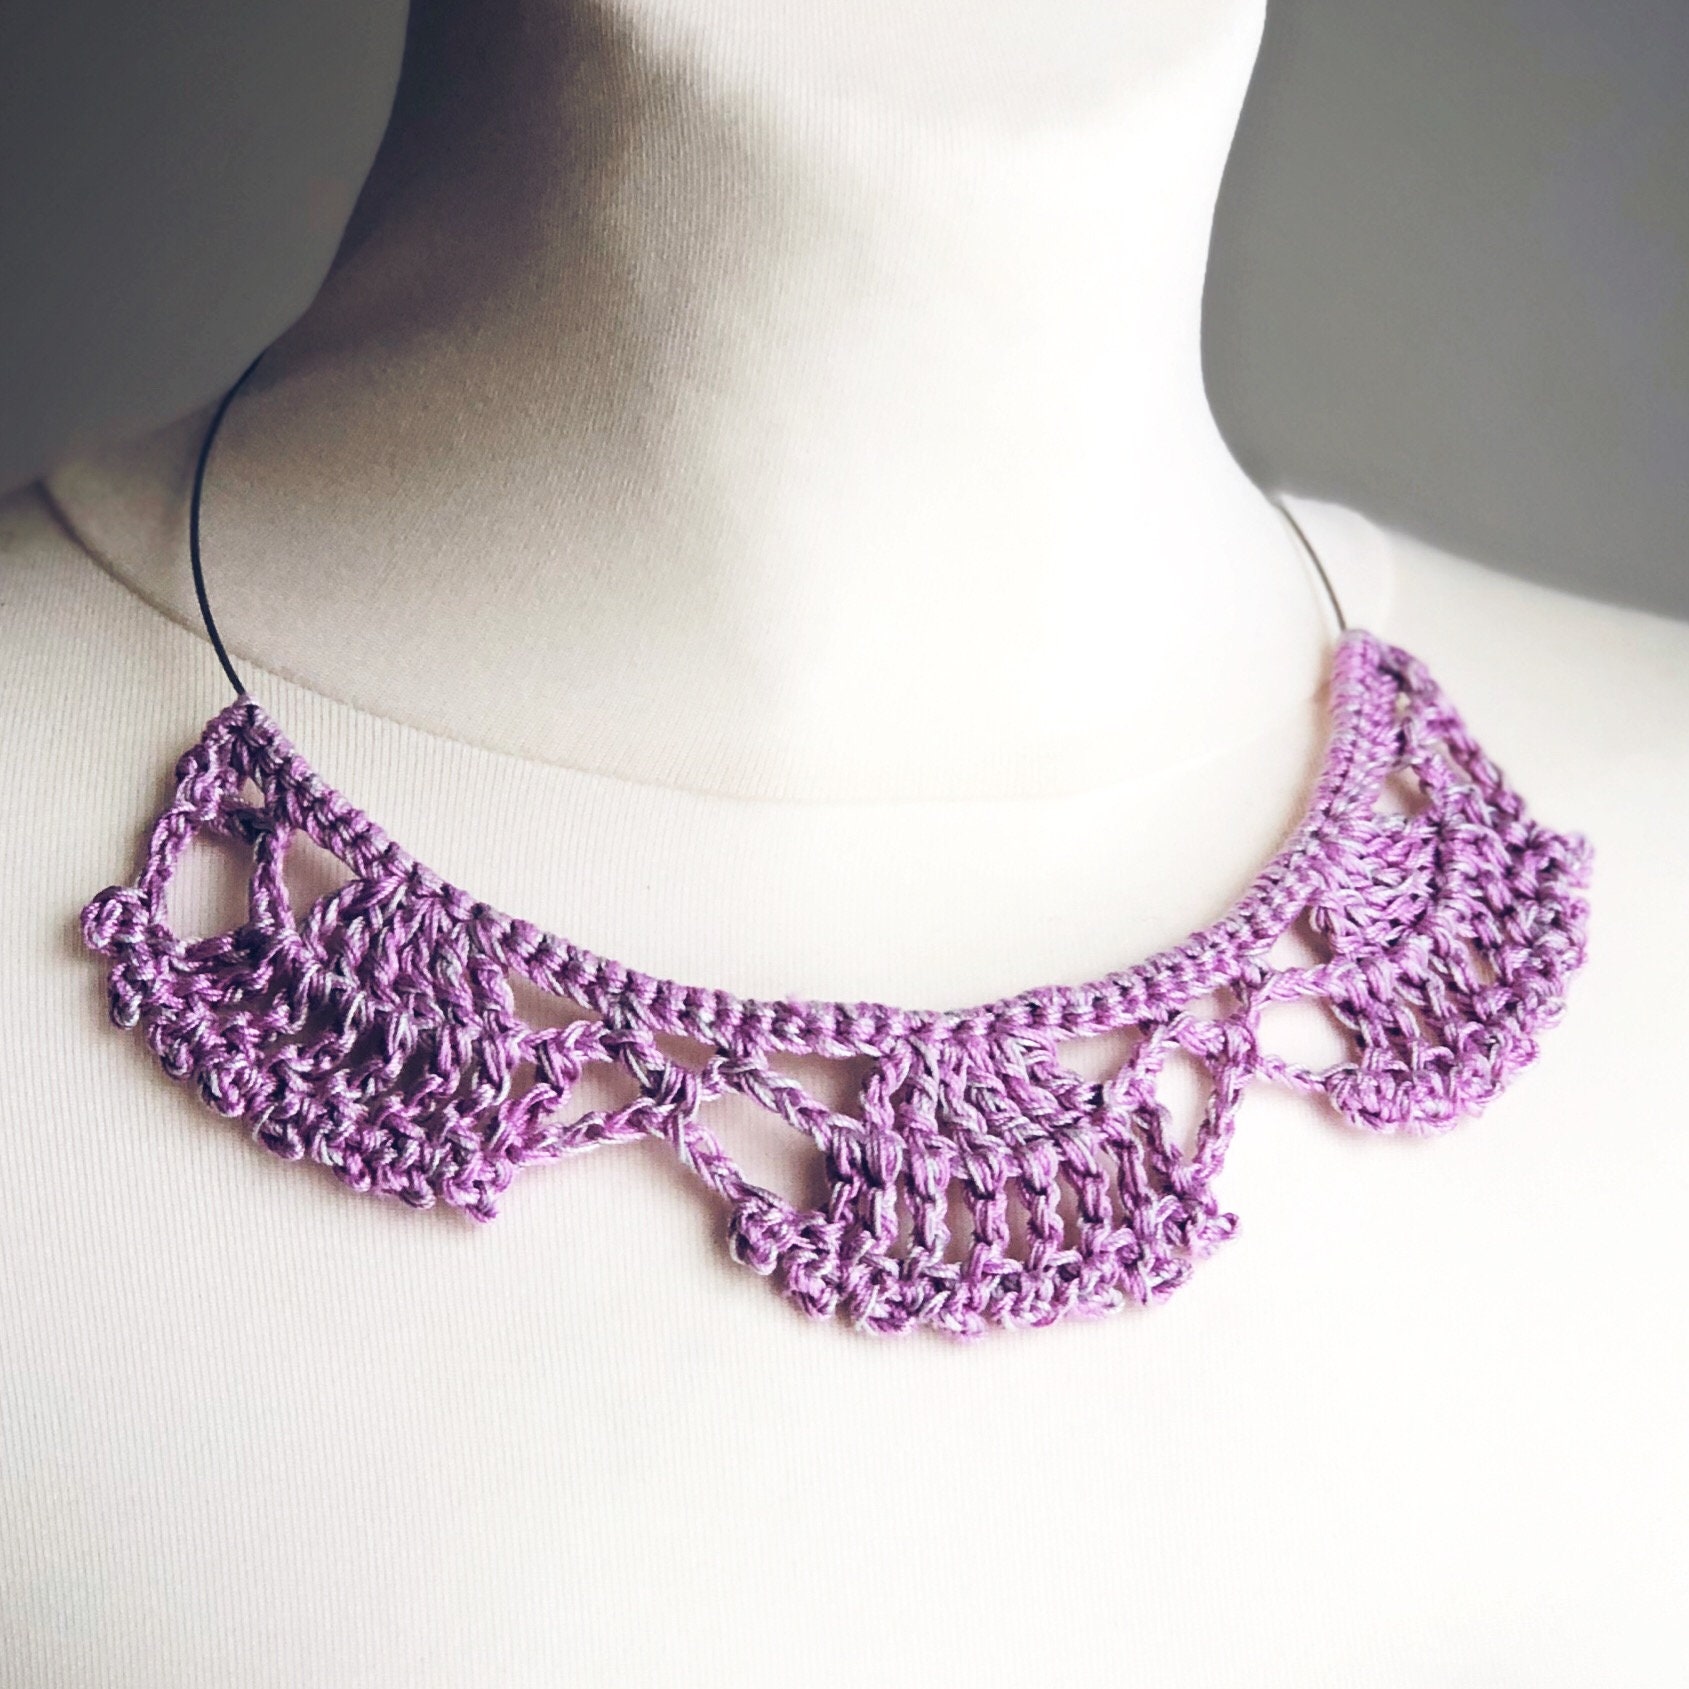 Crazy Cool Crochet Necklace - Crazy Cool Crochet